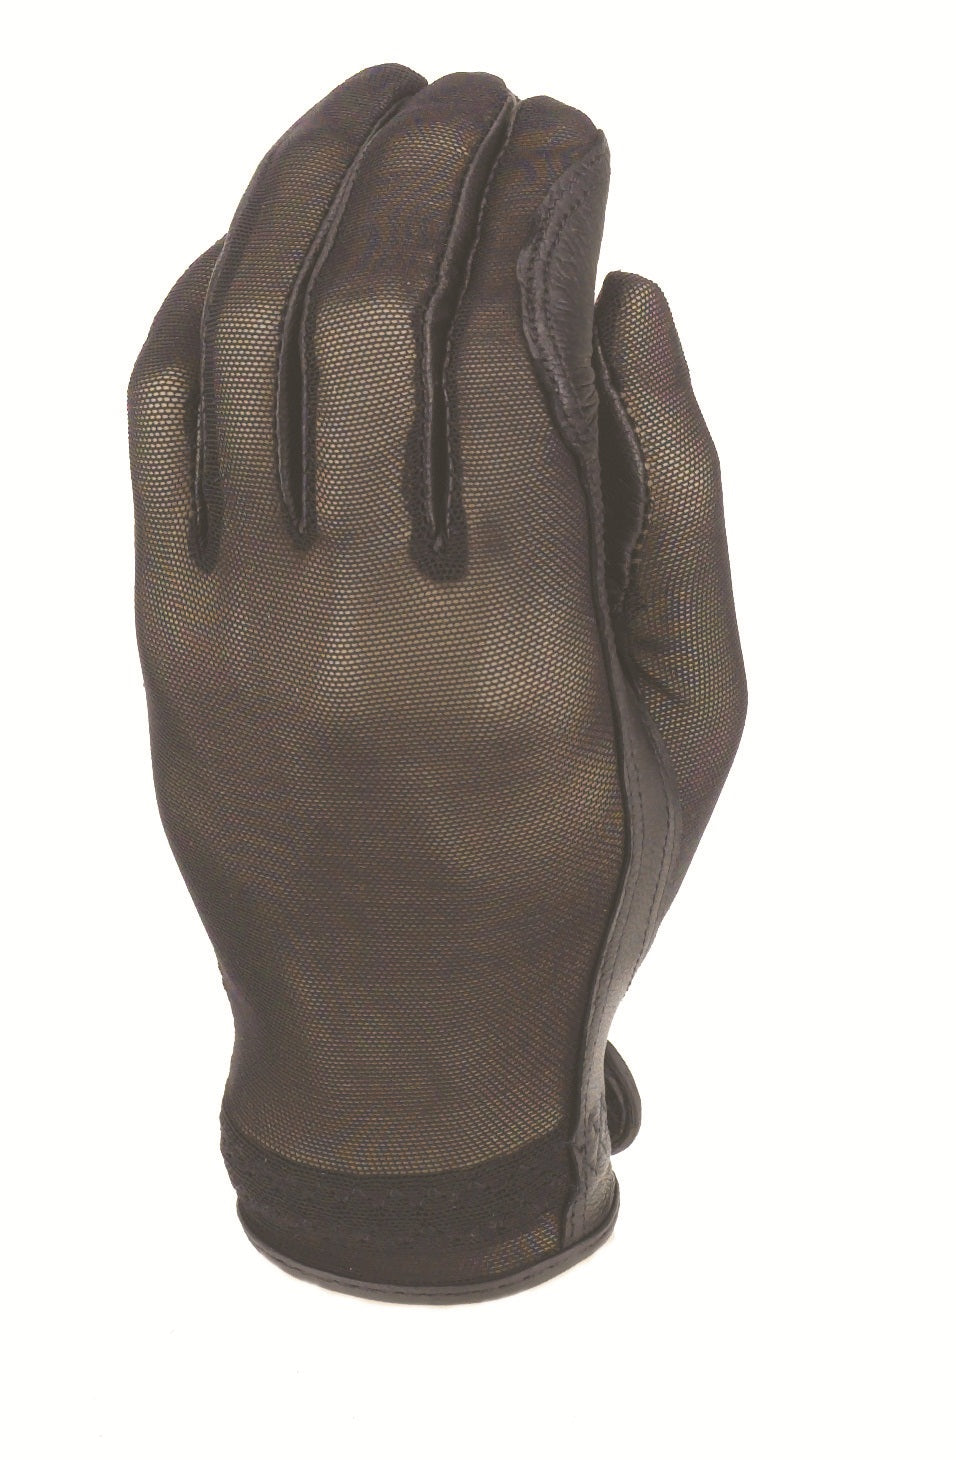 Evertan- Black Golf Glove (for LeftHand)